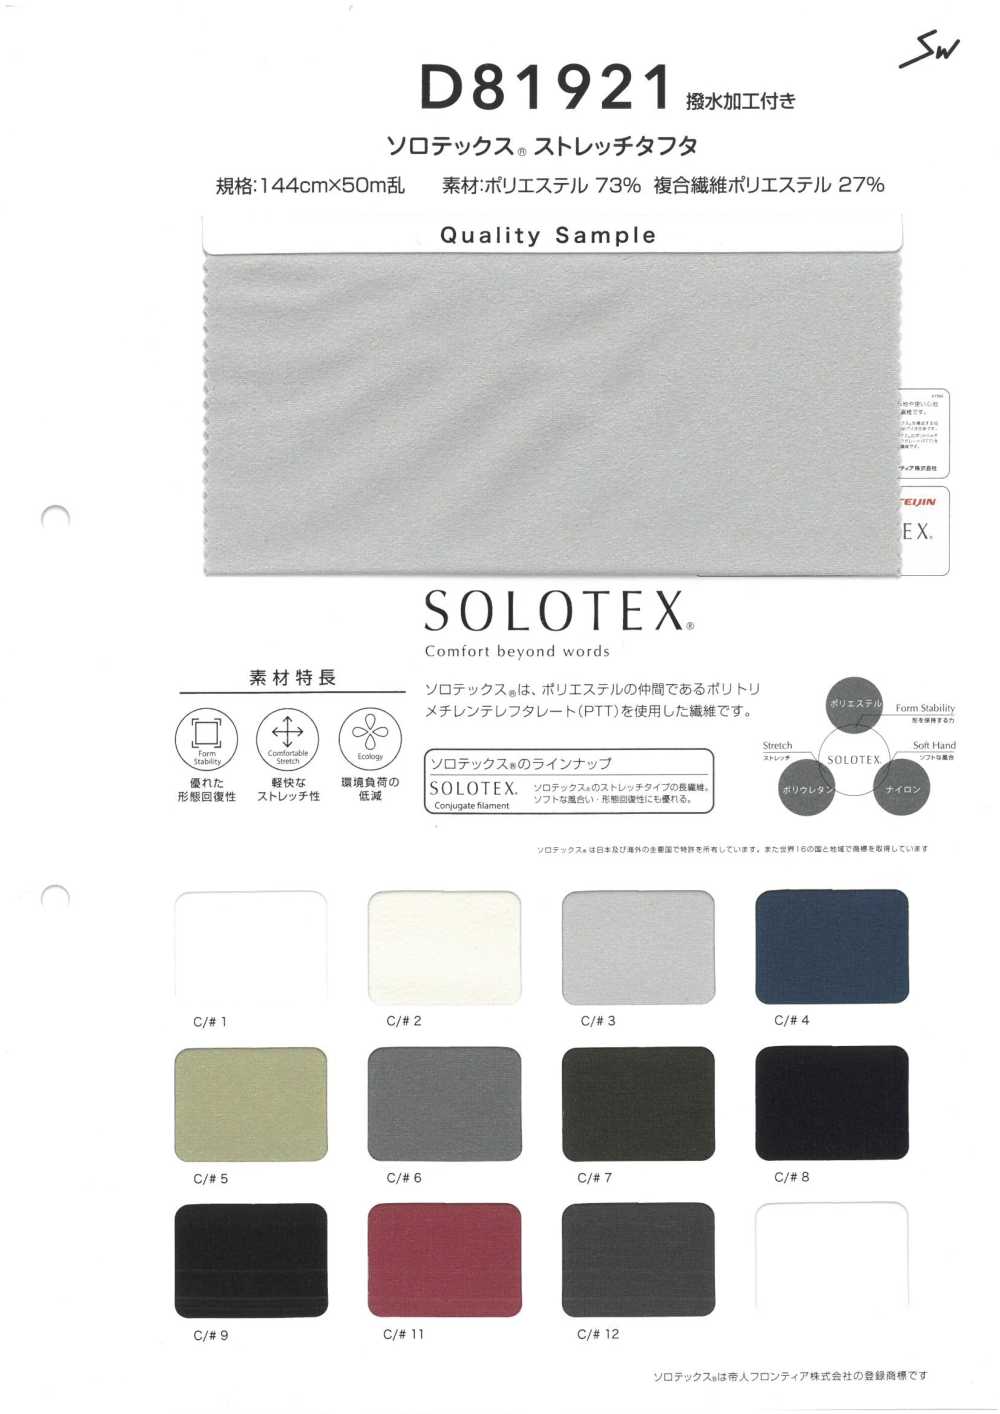 D81921 Solotex[Vải] Dệt May Sanwa